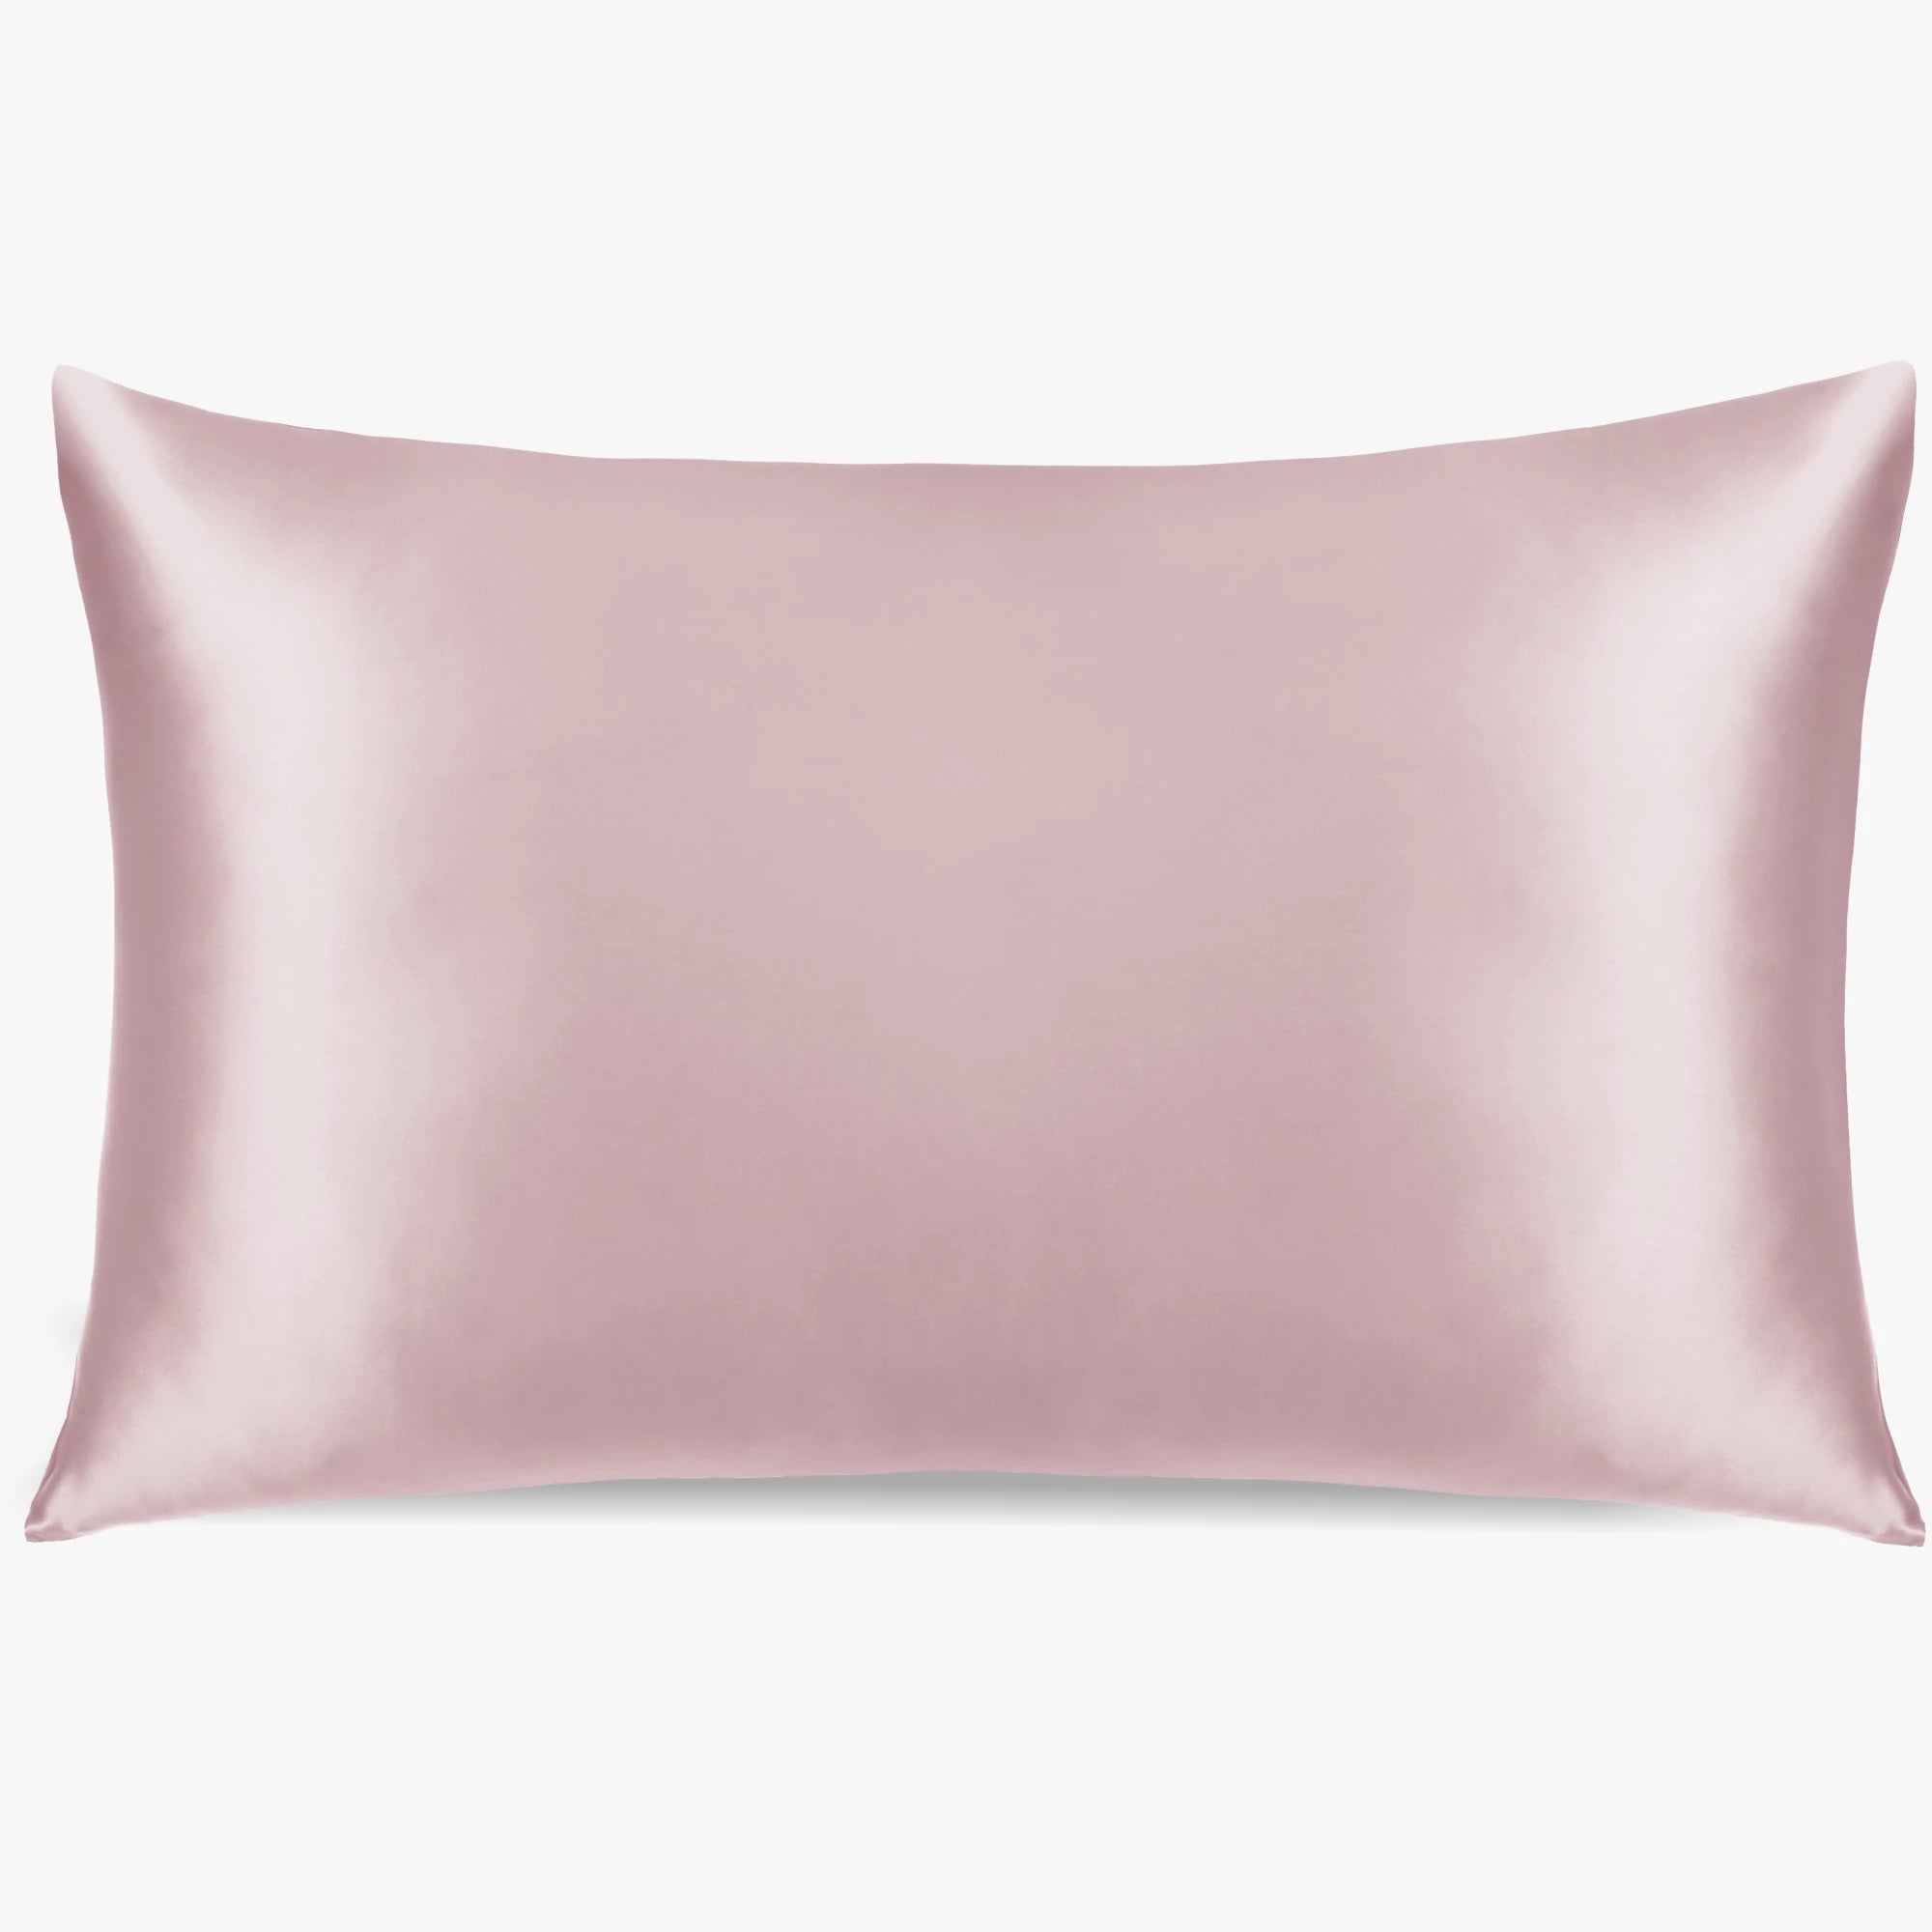 Pure silk pillowcase for better hair, skin and sleep